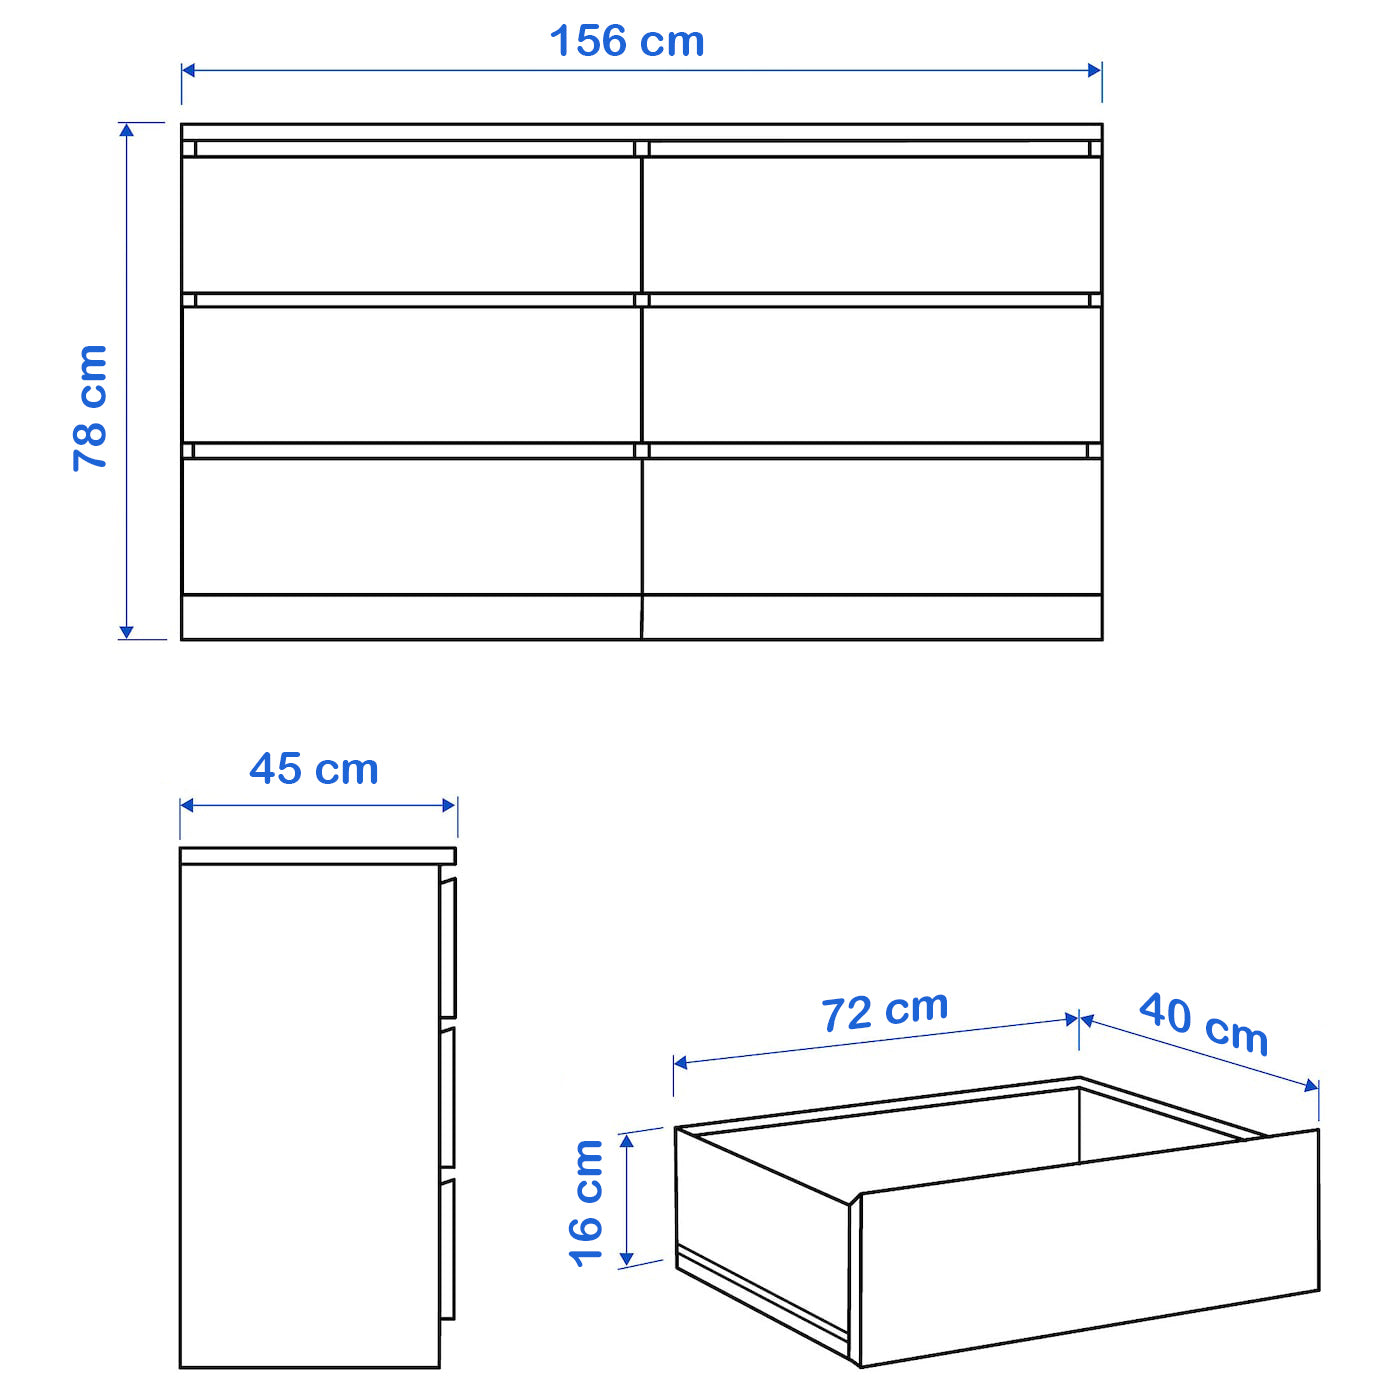 Drawer unit 156 x 45 cm - WDY21